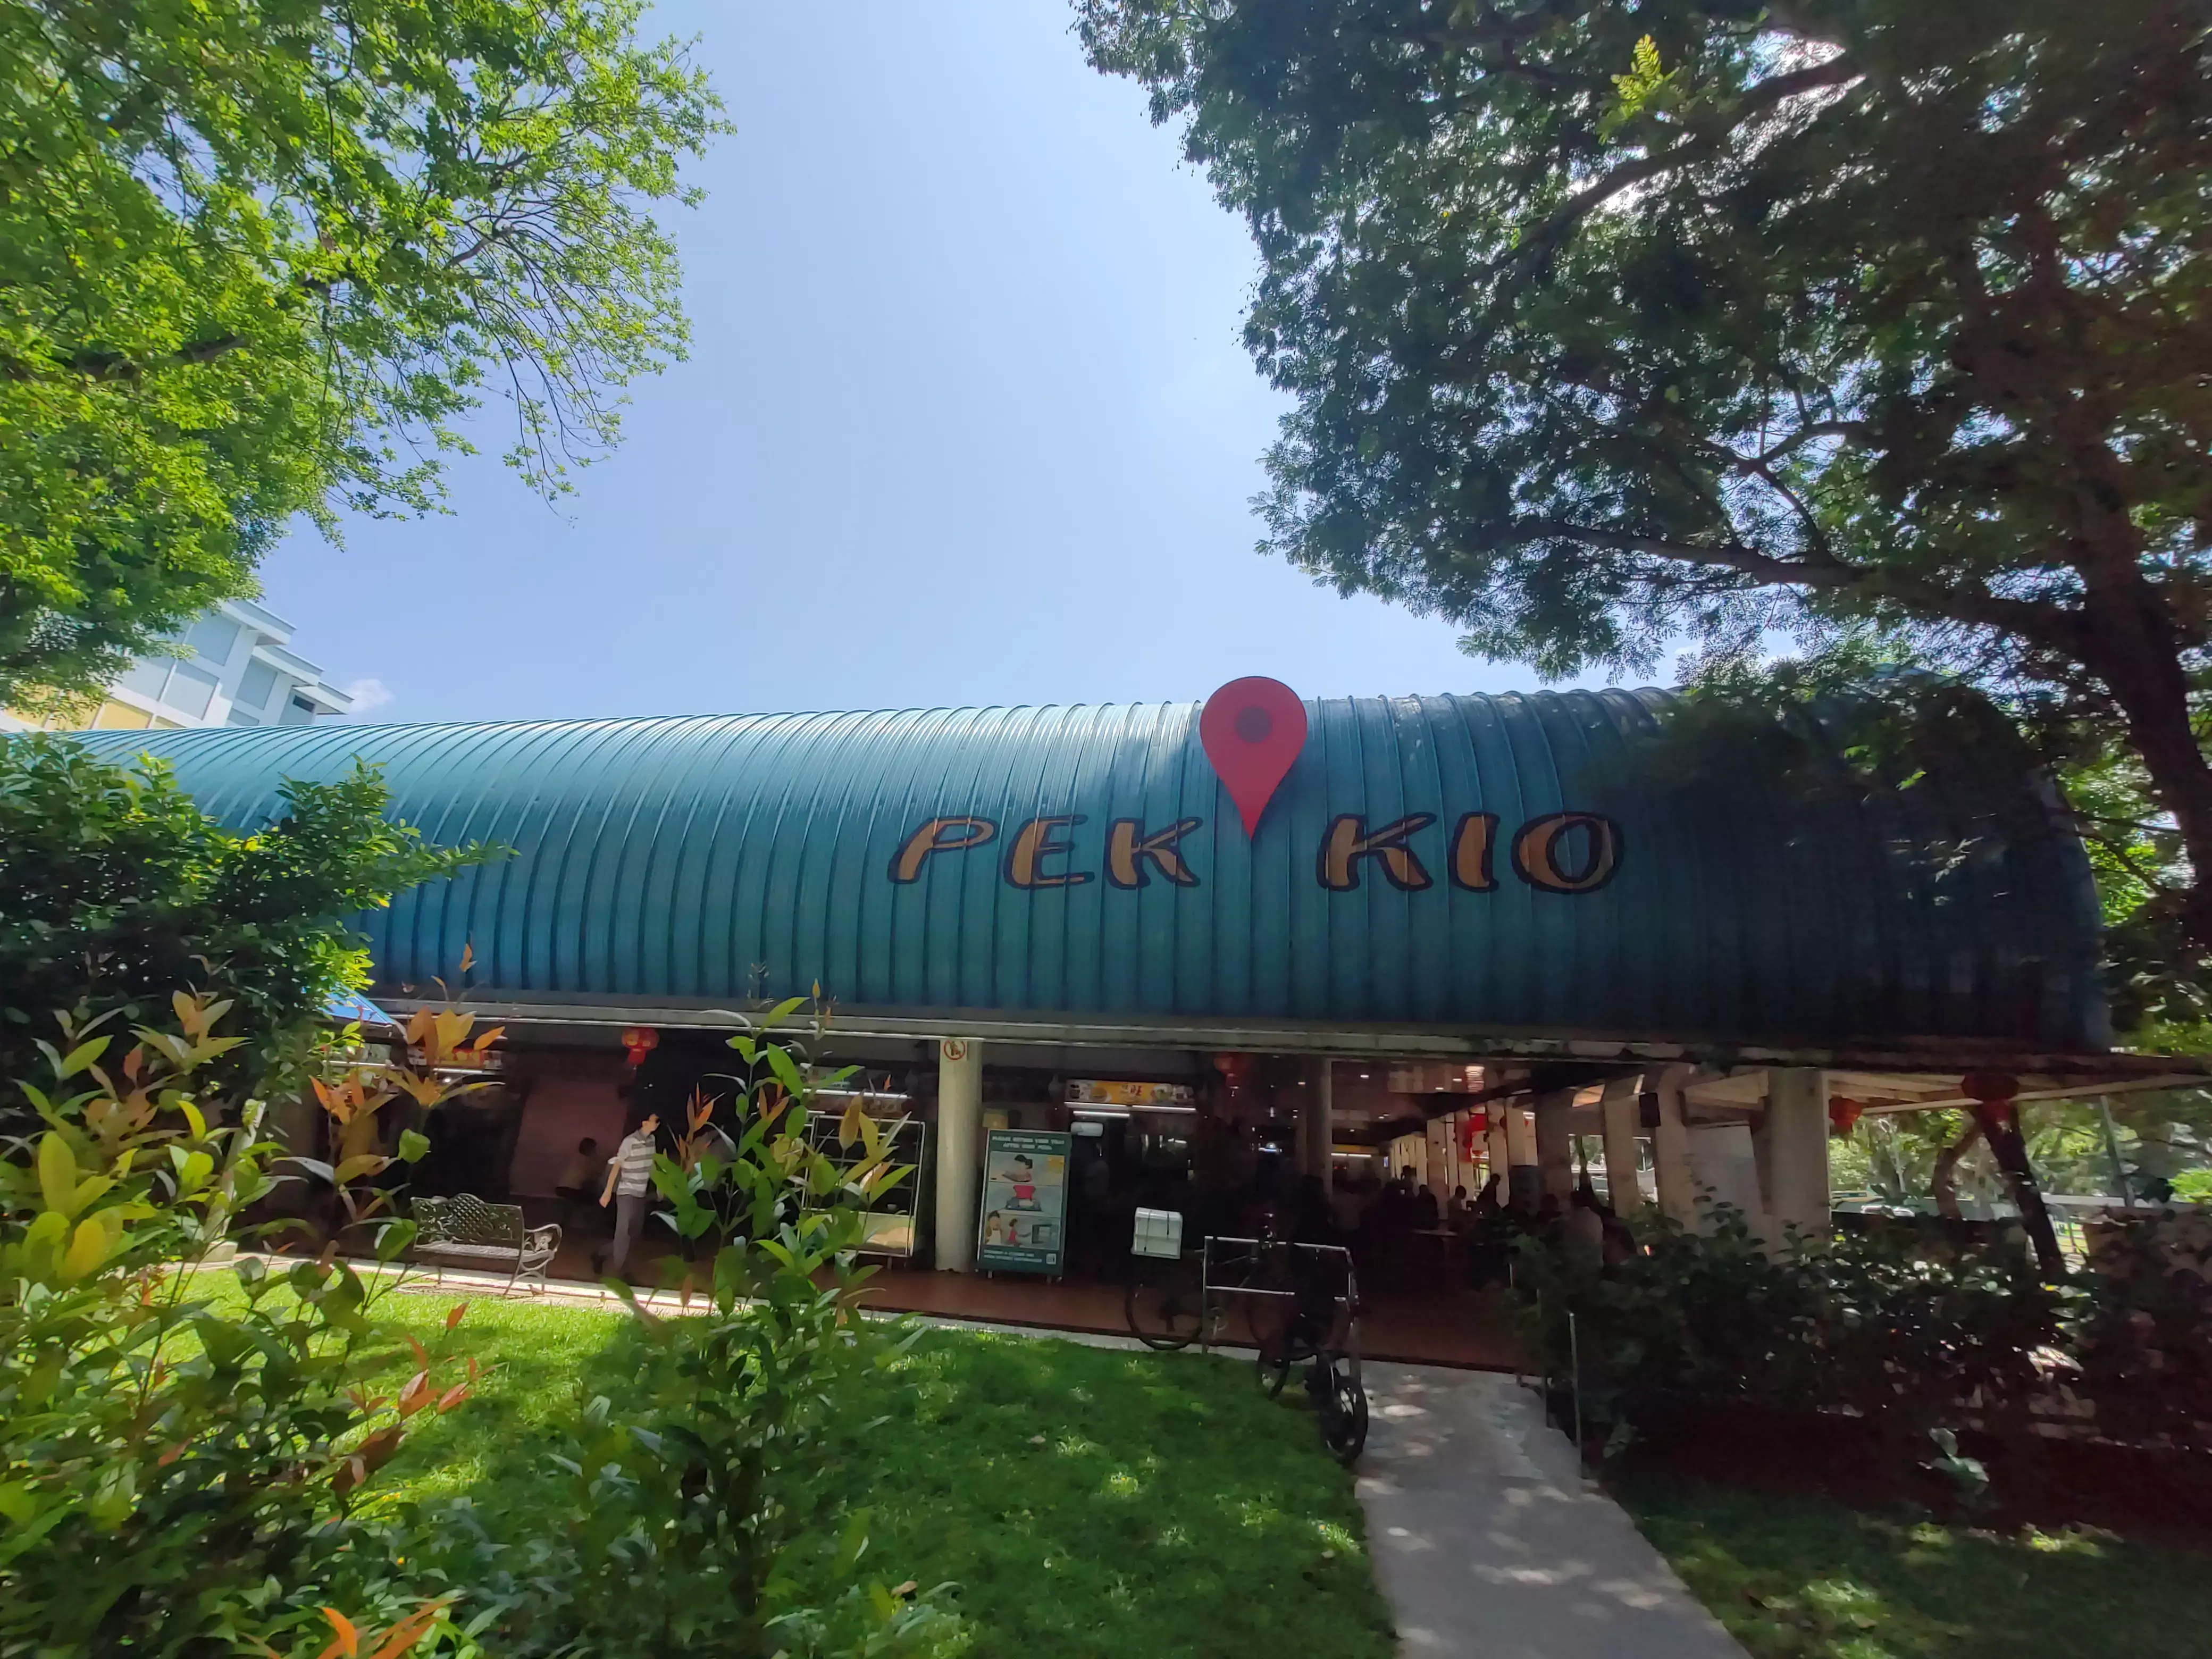 Guide: Pek Kio Food Centre (Singapore)